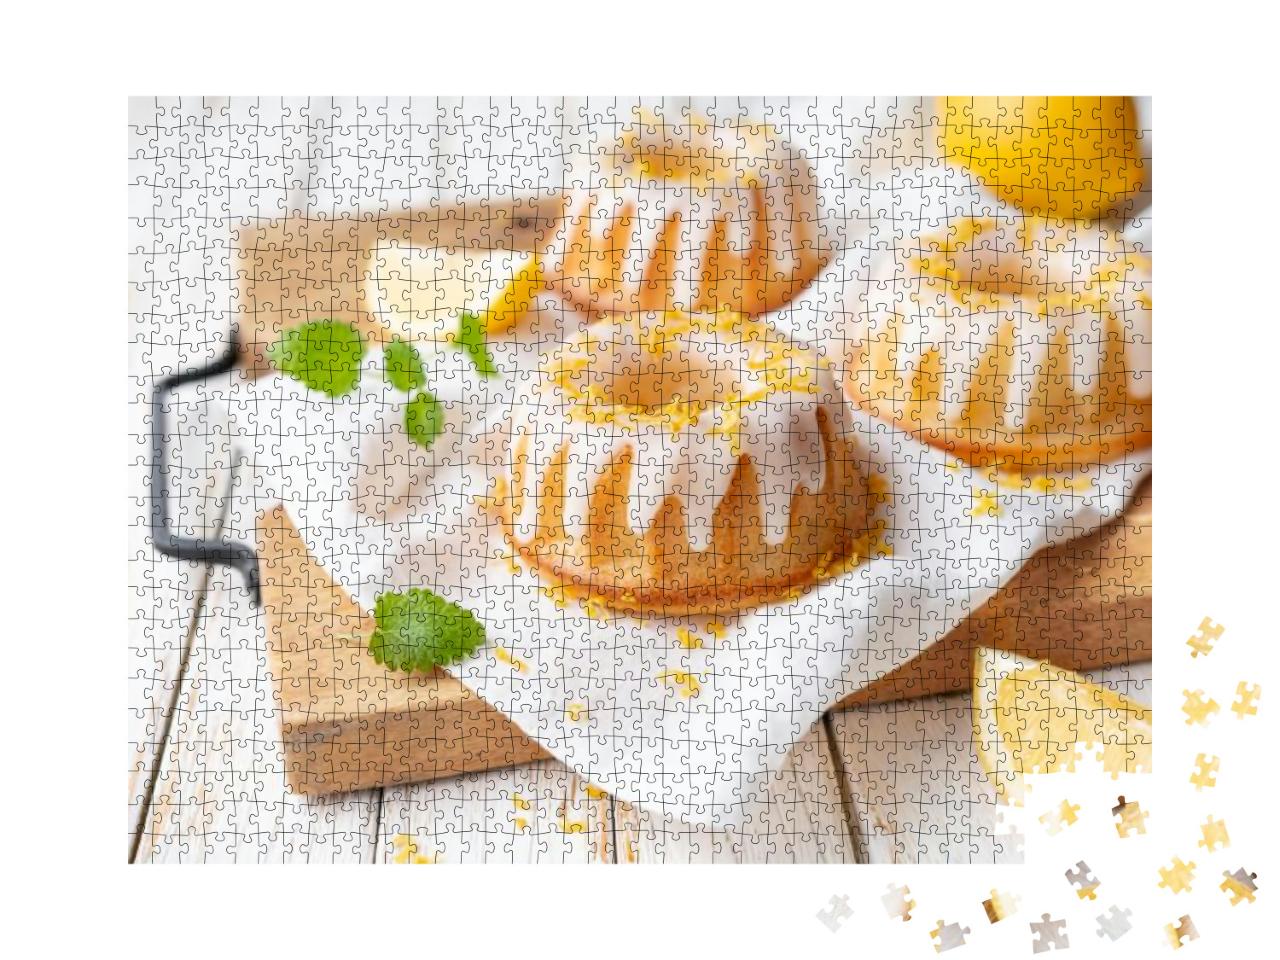 Tangy Mini Lemon Bundt Cakes Topped with Lemon Glaze... Jigsaw Puzzle with 1000 pieces